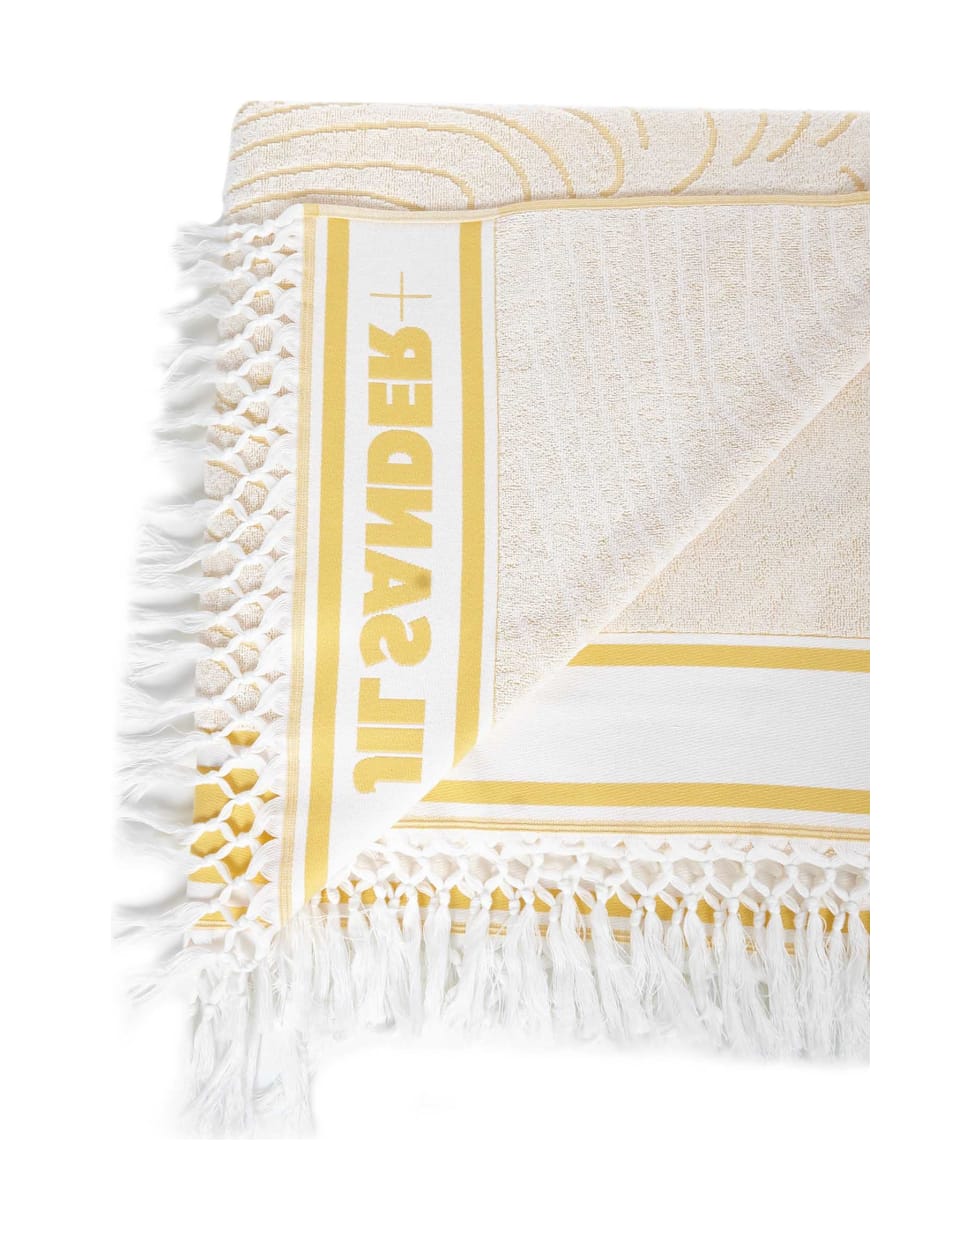 Jil Sander Towel - Yellow